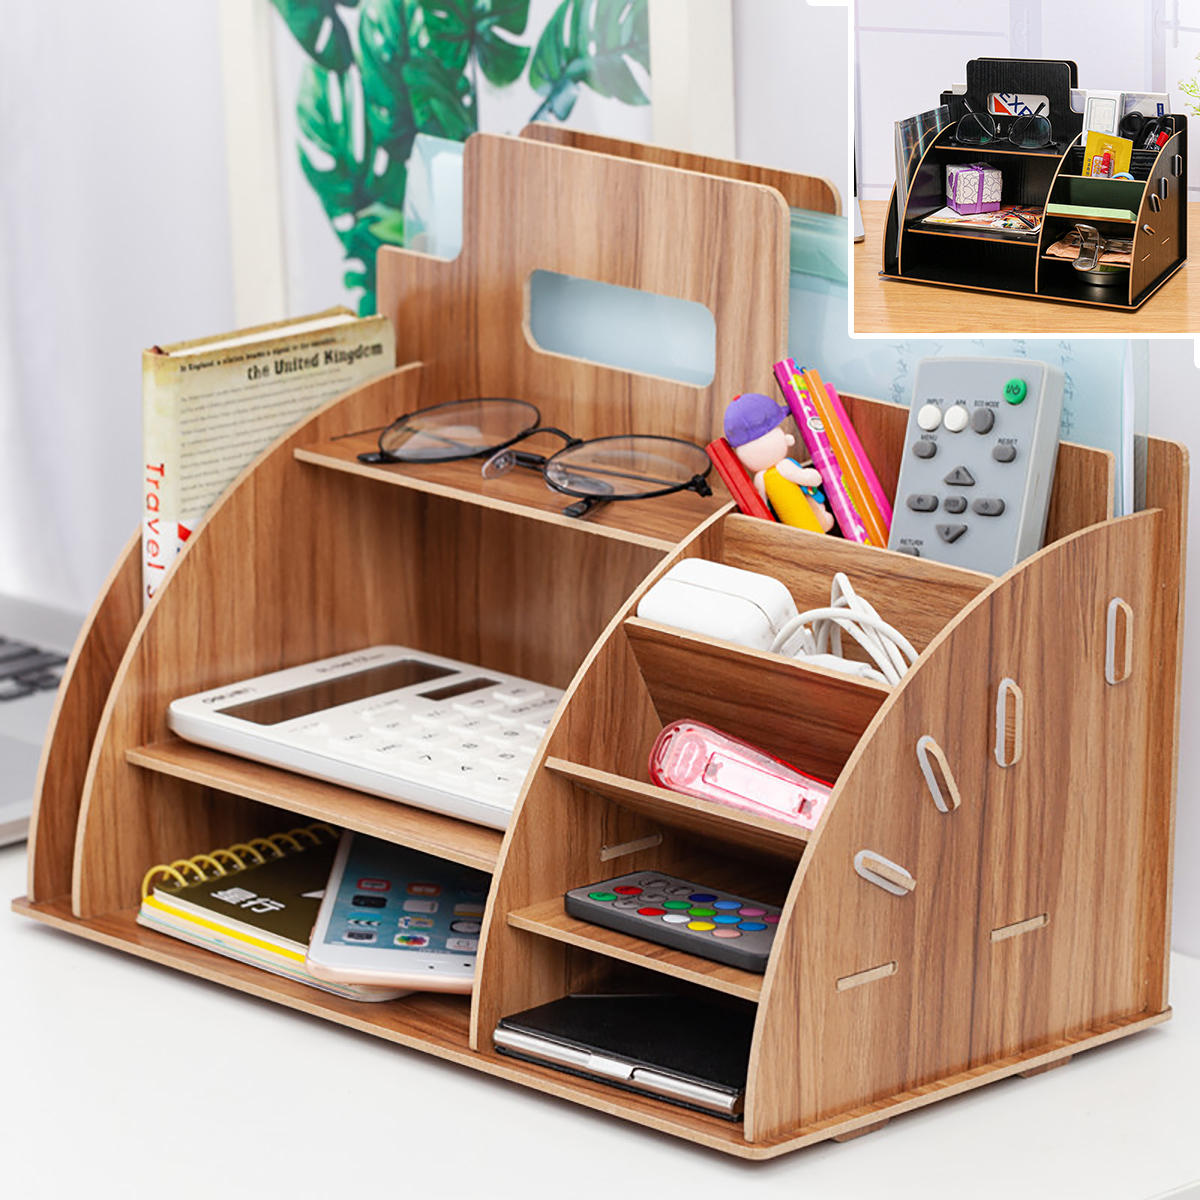 Wooden Desktop Organizer Office Supplies Storage Rack Wooden Desk Organizer Home Office Supply Stora